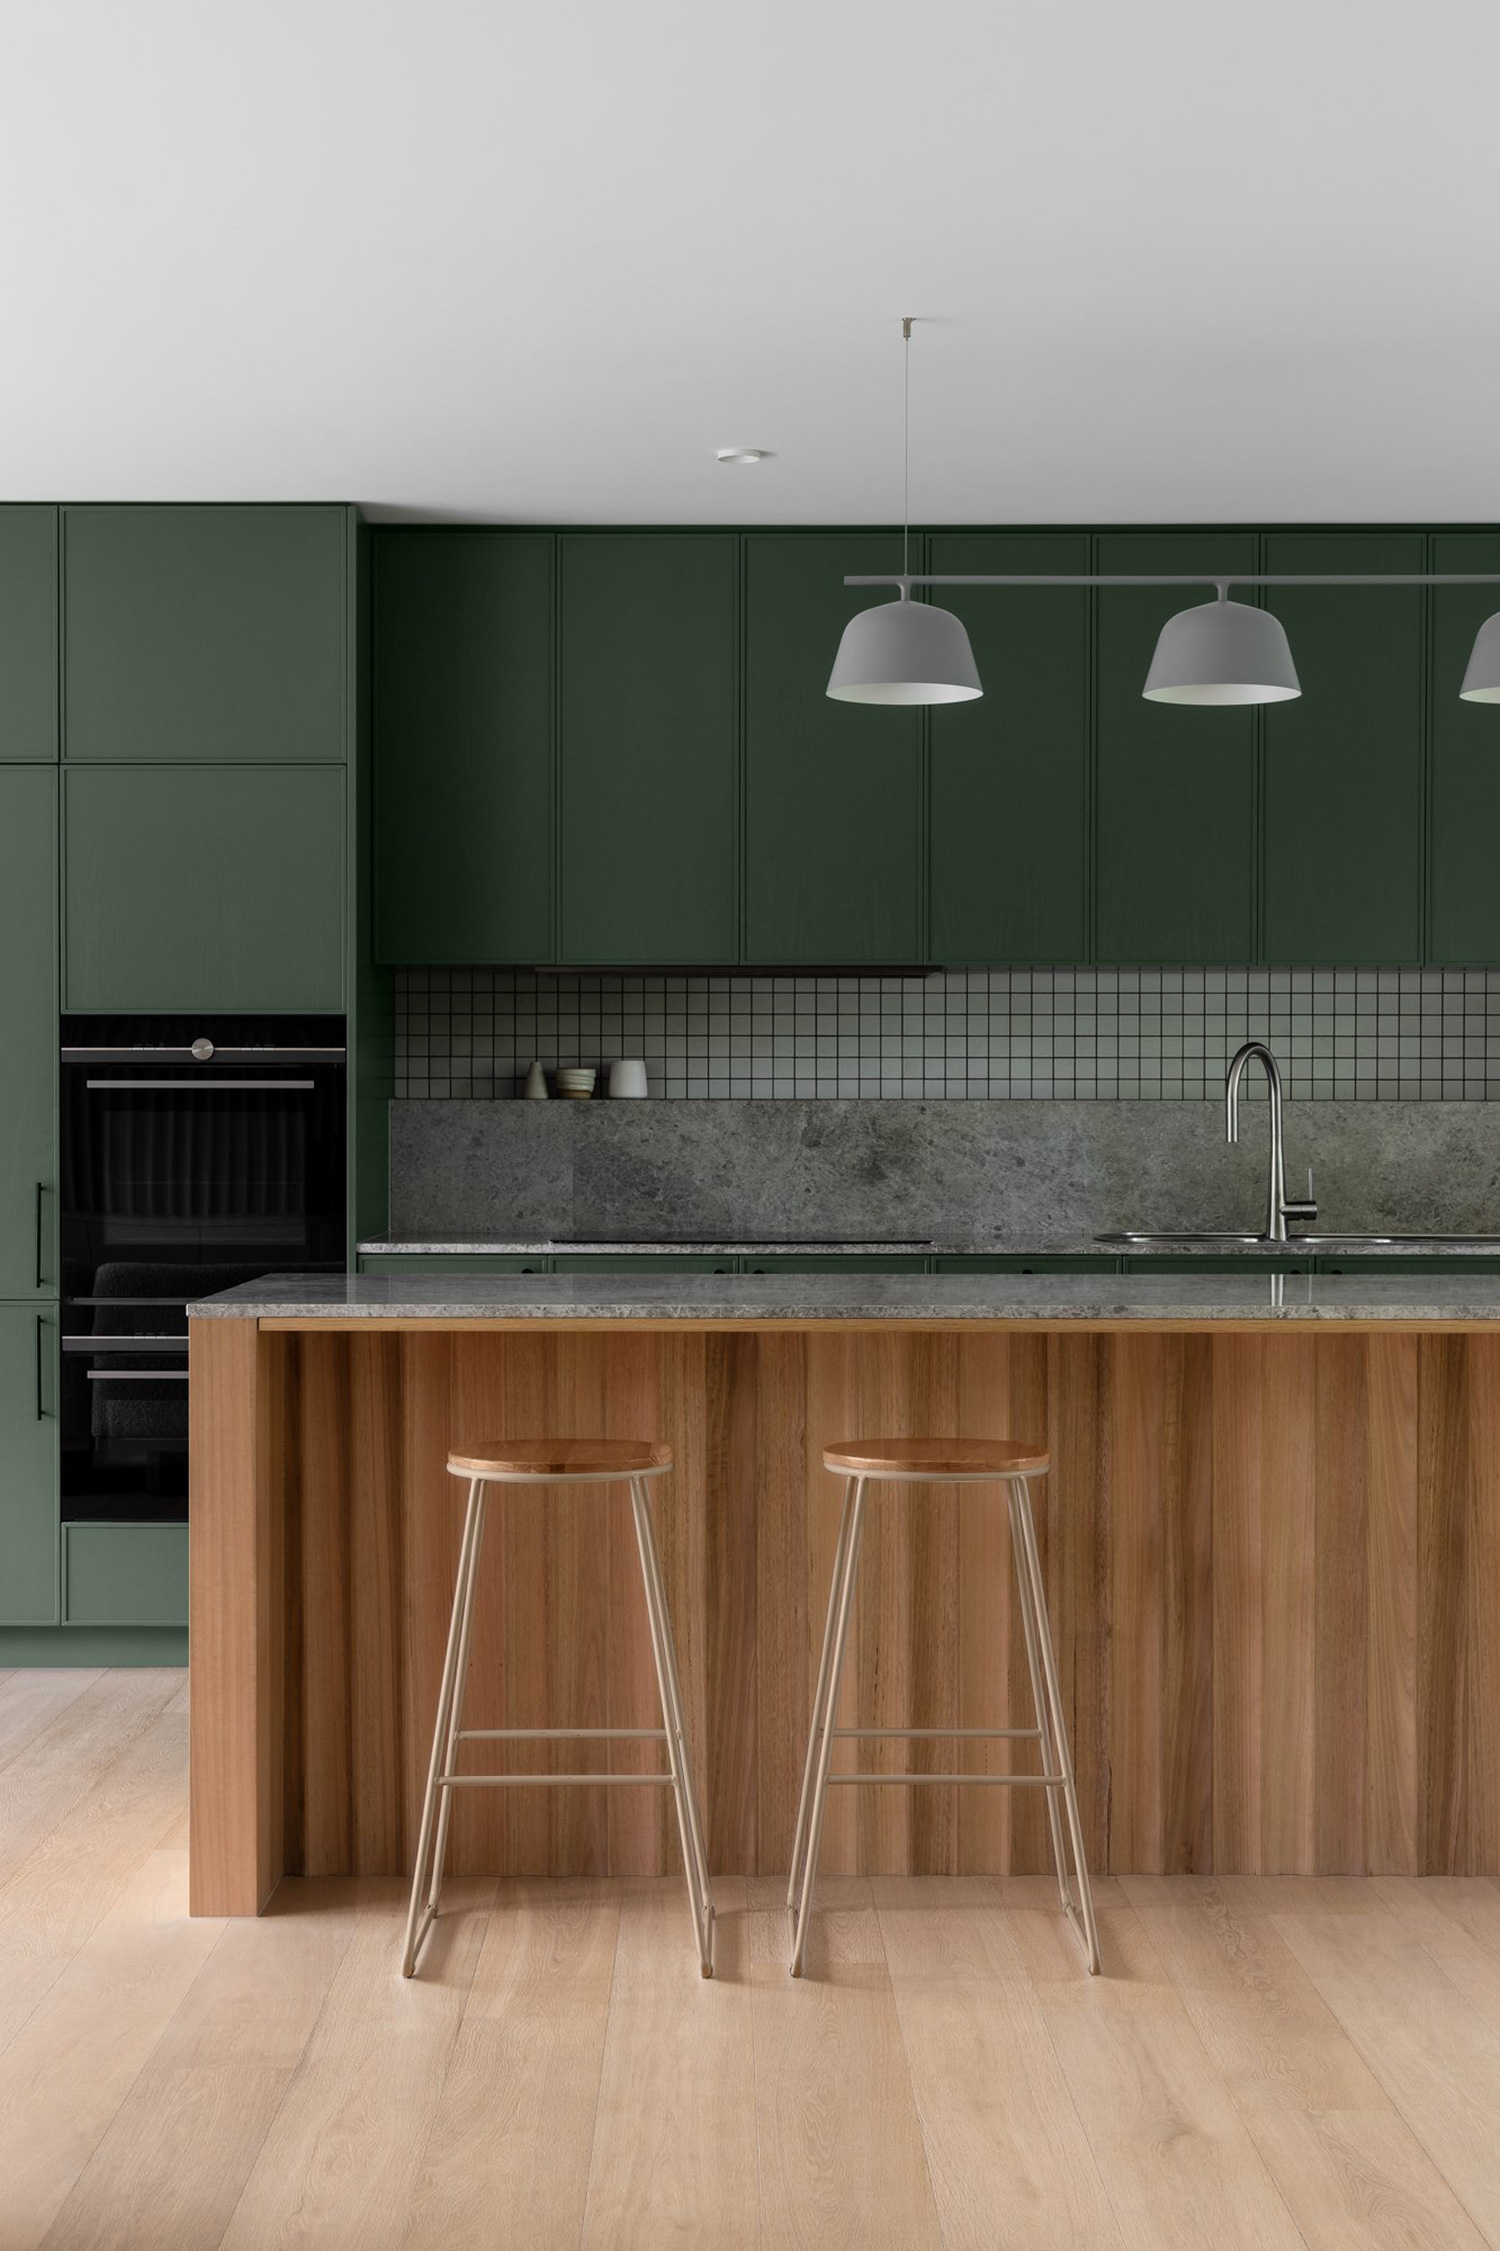 Green kitchen cabinets